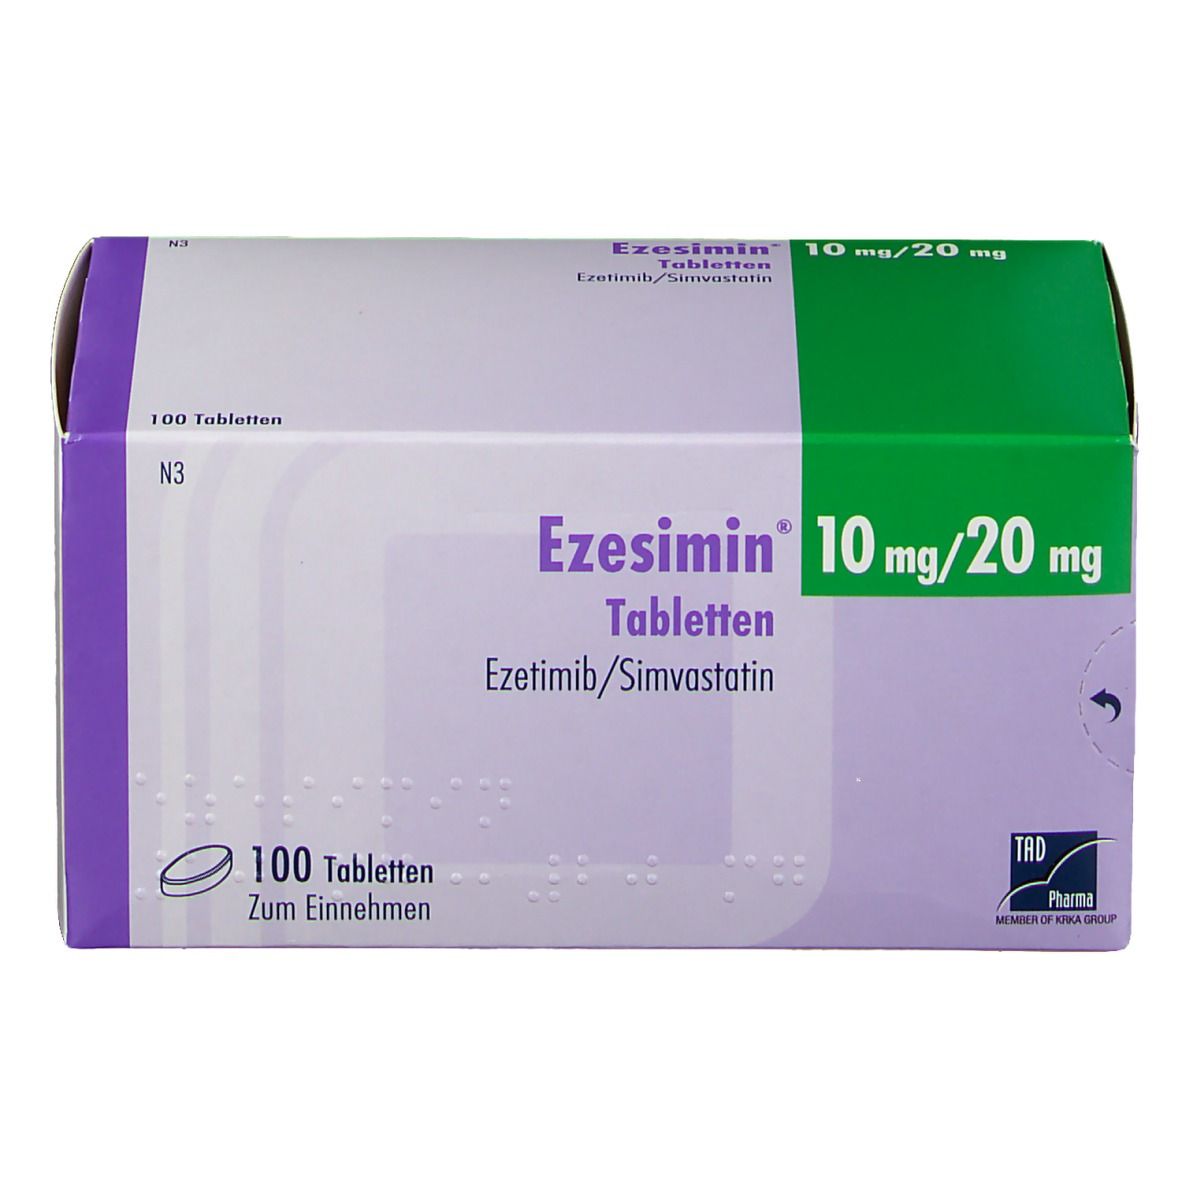 Ezesimin® 10 mg/20 mg